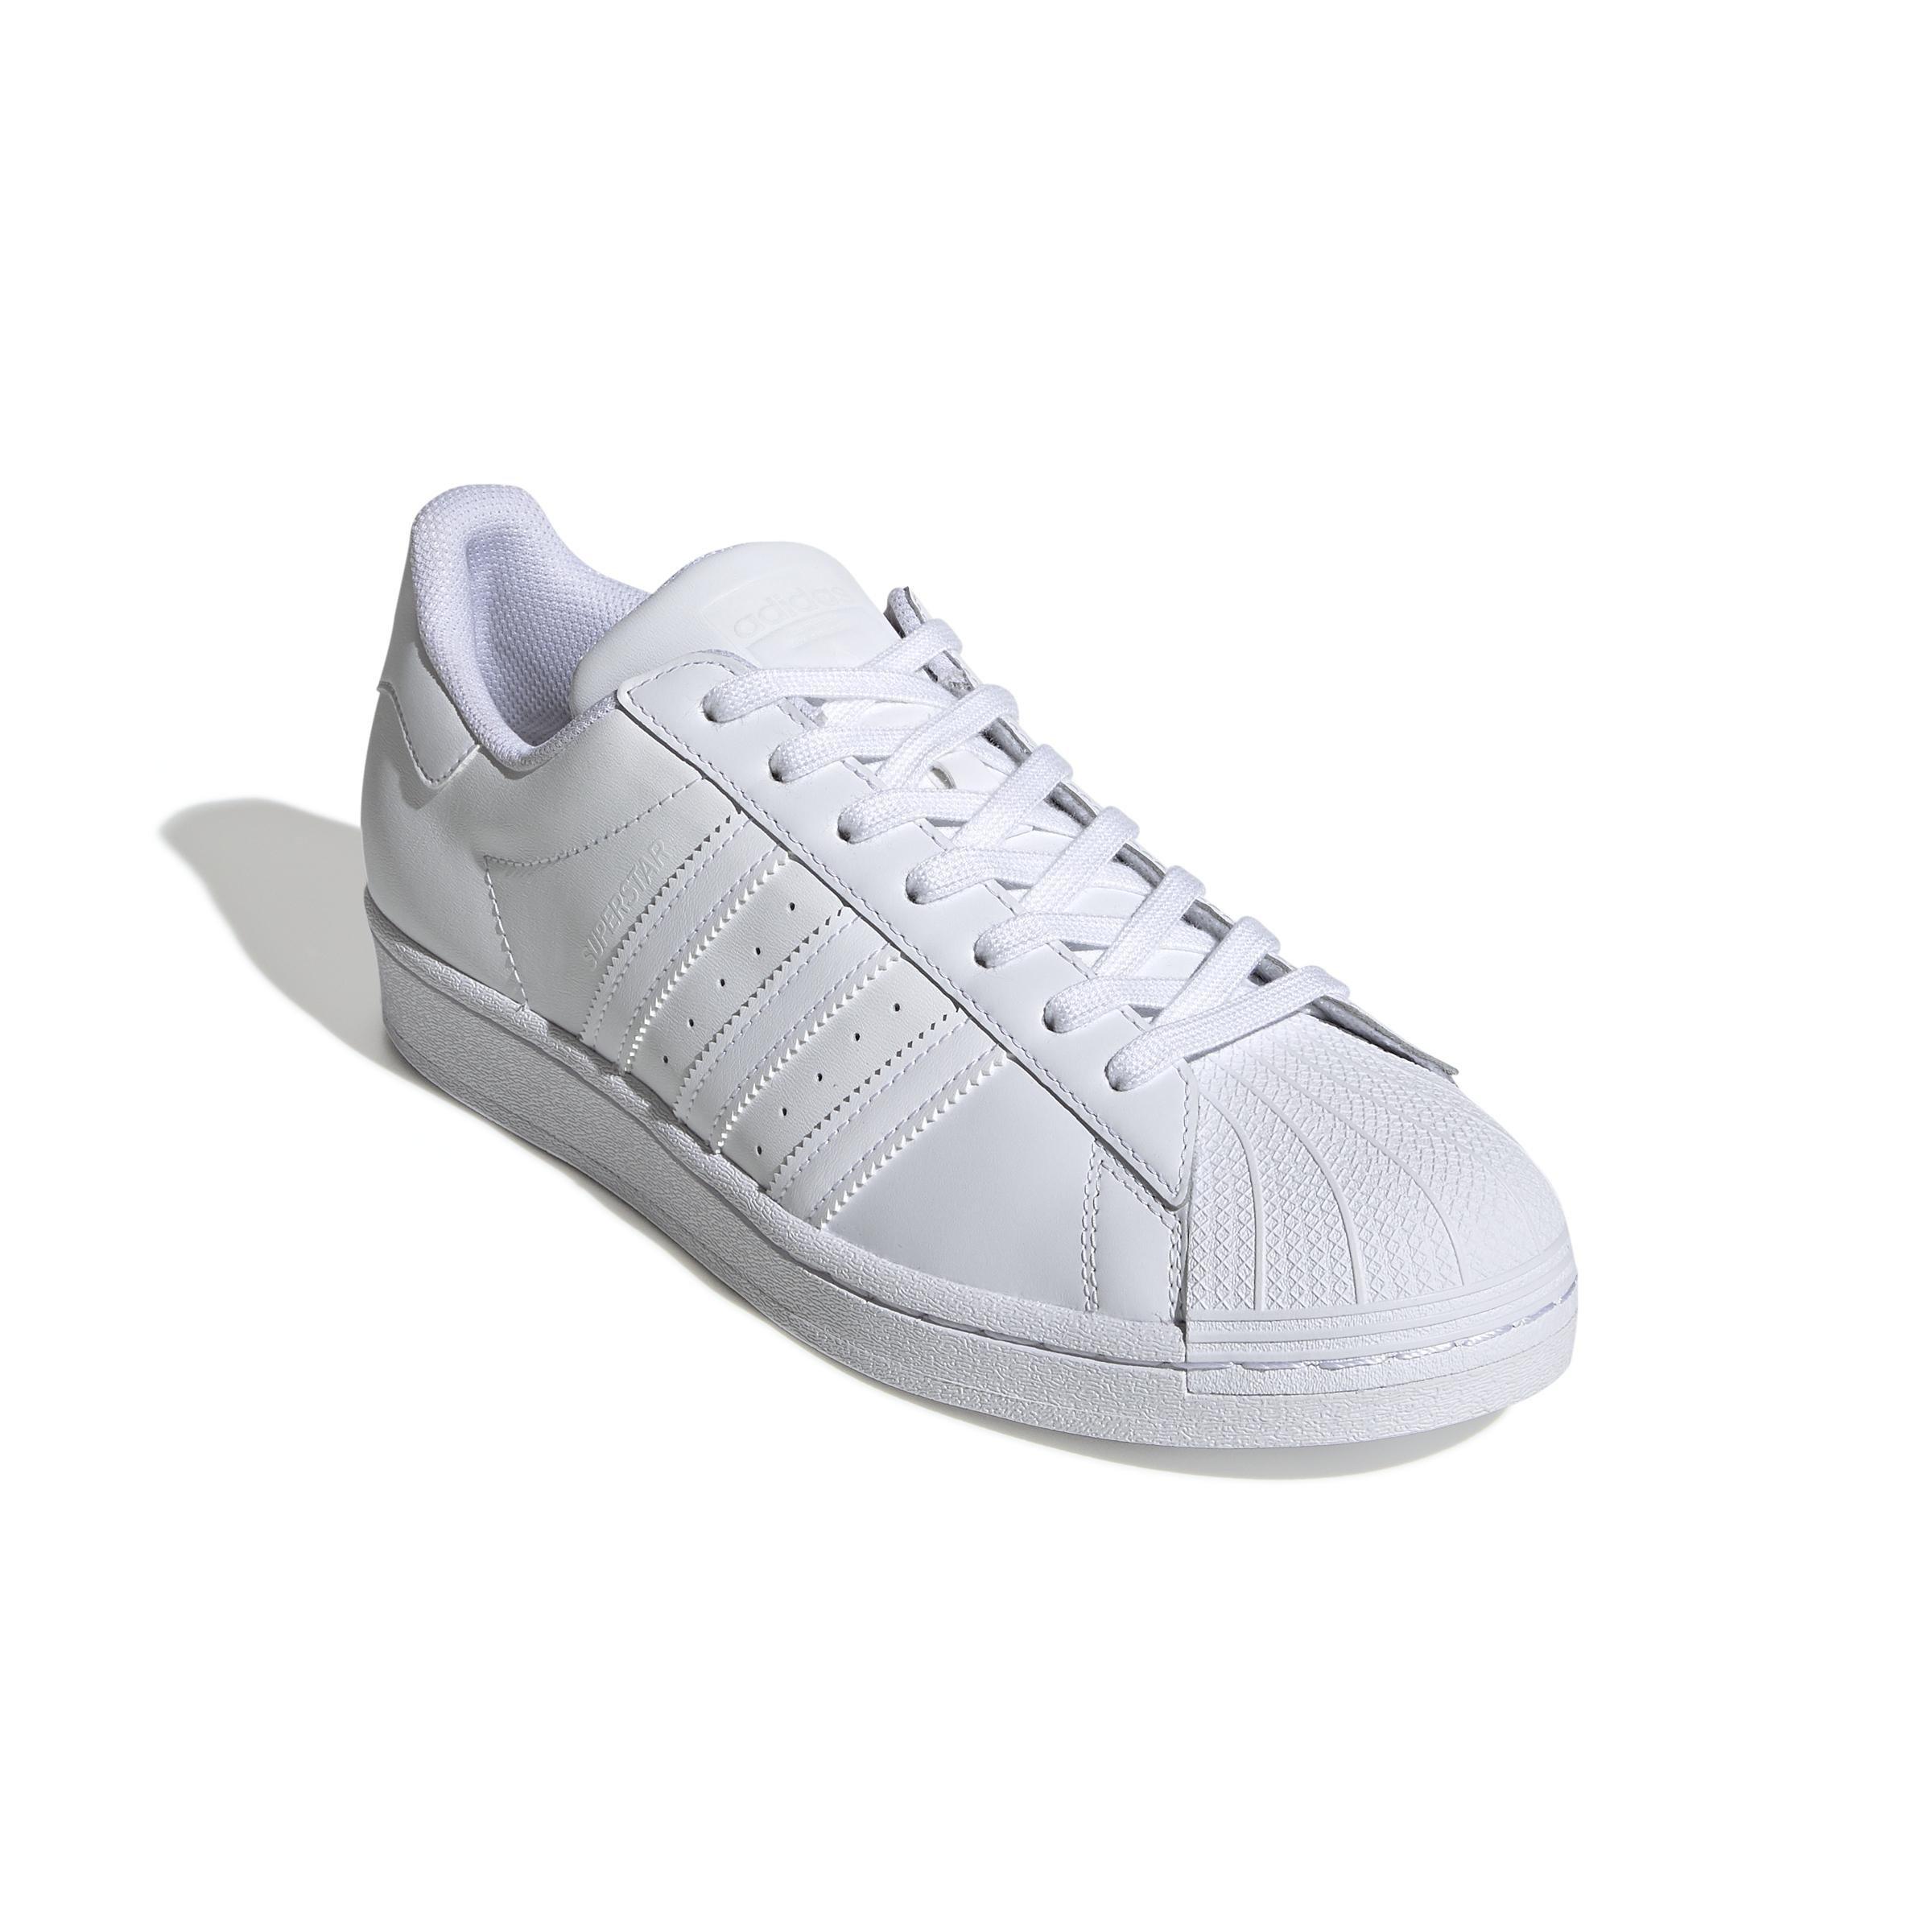 adidas - Men Superstar Shoes, White